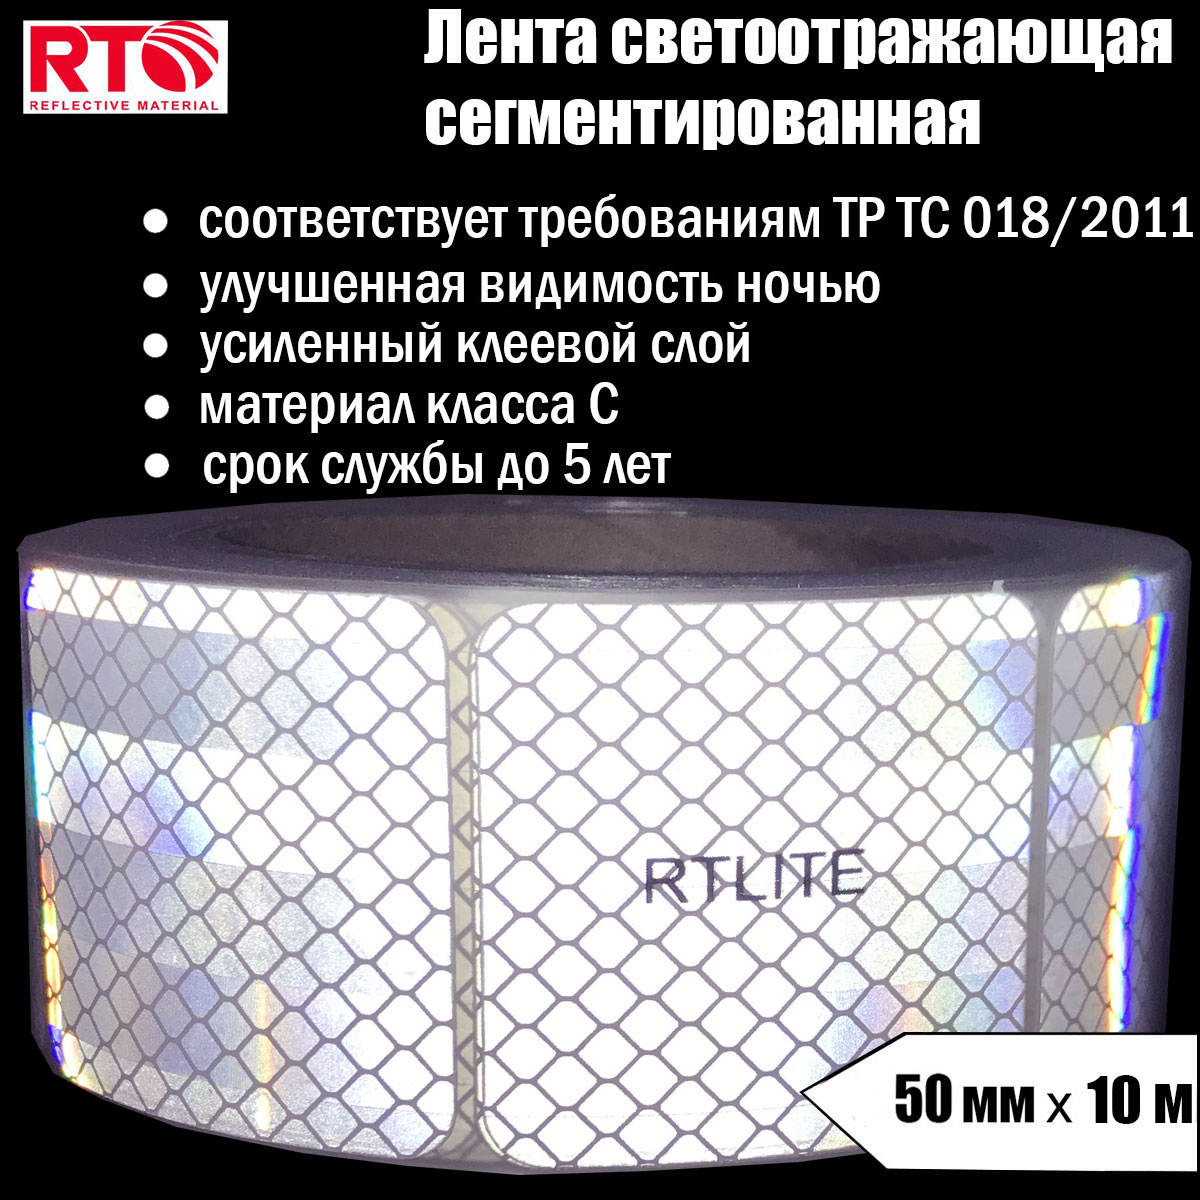 Лента светоотражающая сегментированная RTLITE RT-V104 для контурной маркировки, 50мм х 10м лента светоотражающая для контурной маркировки rtlite rt v104 50 8 мм х 10 м желтая